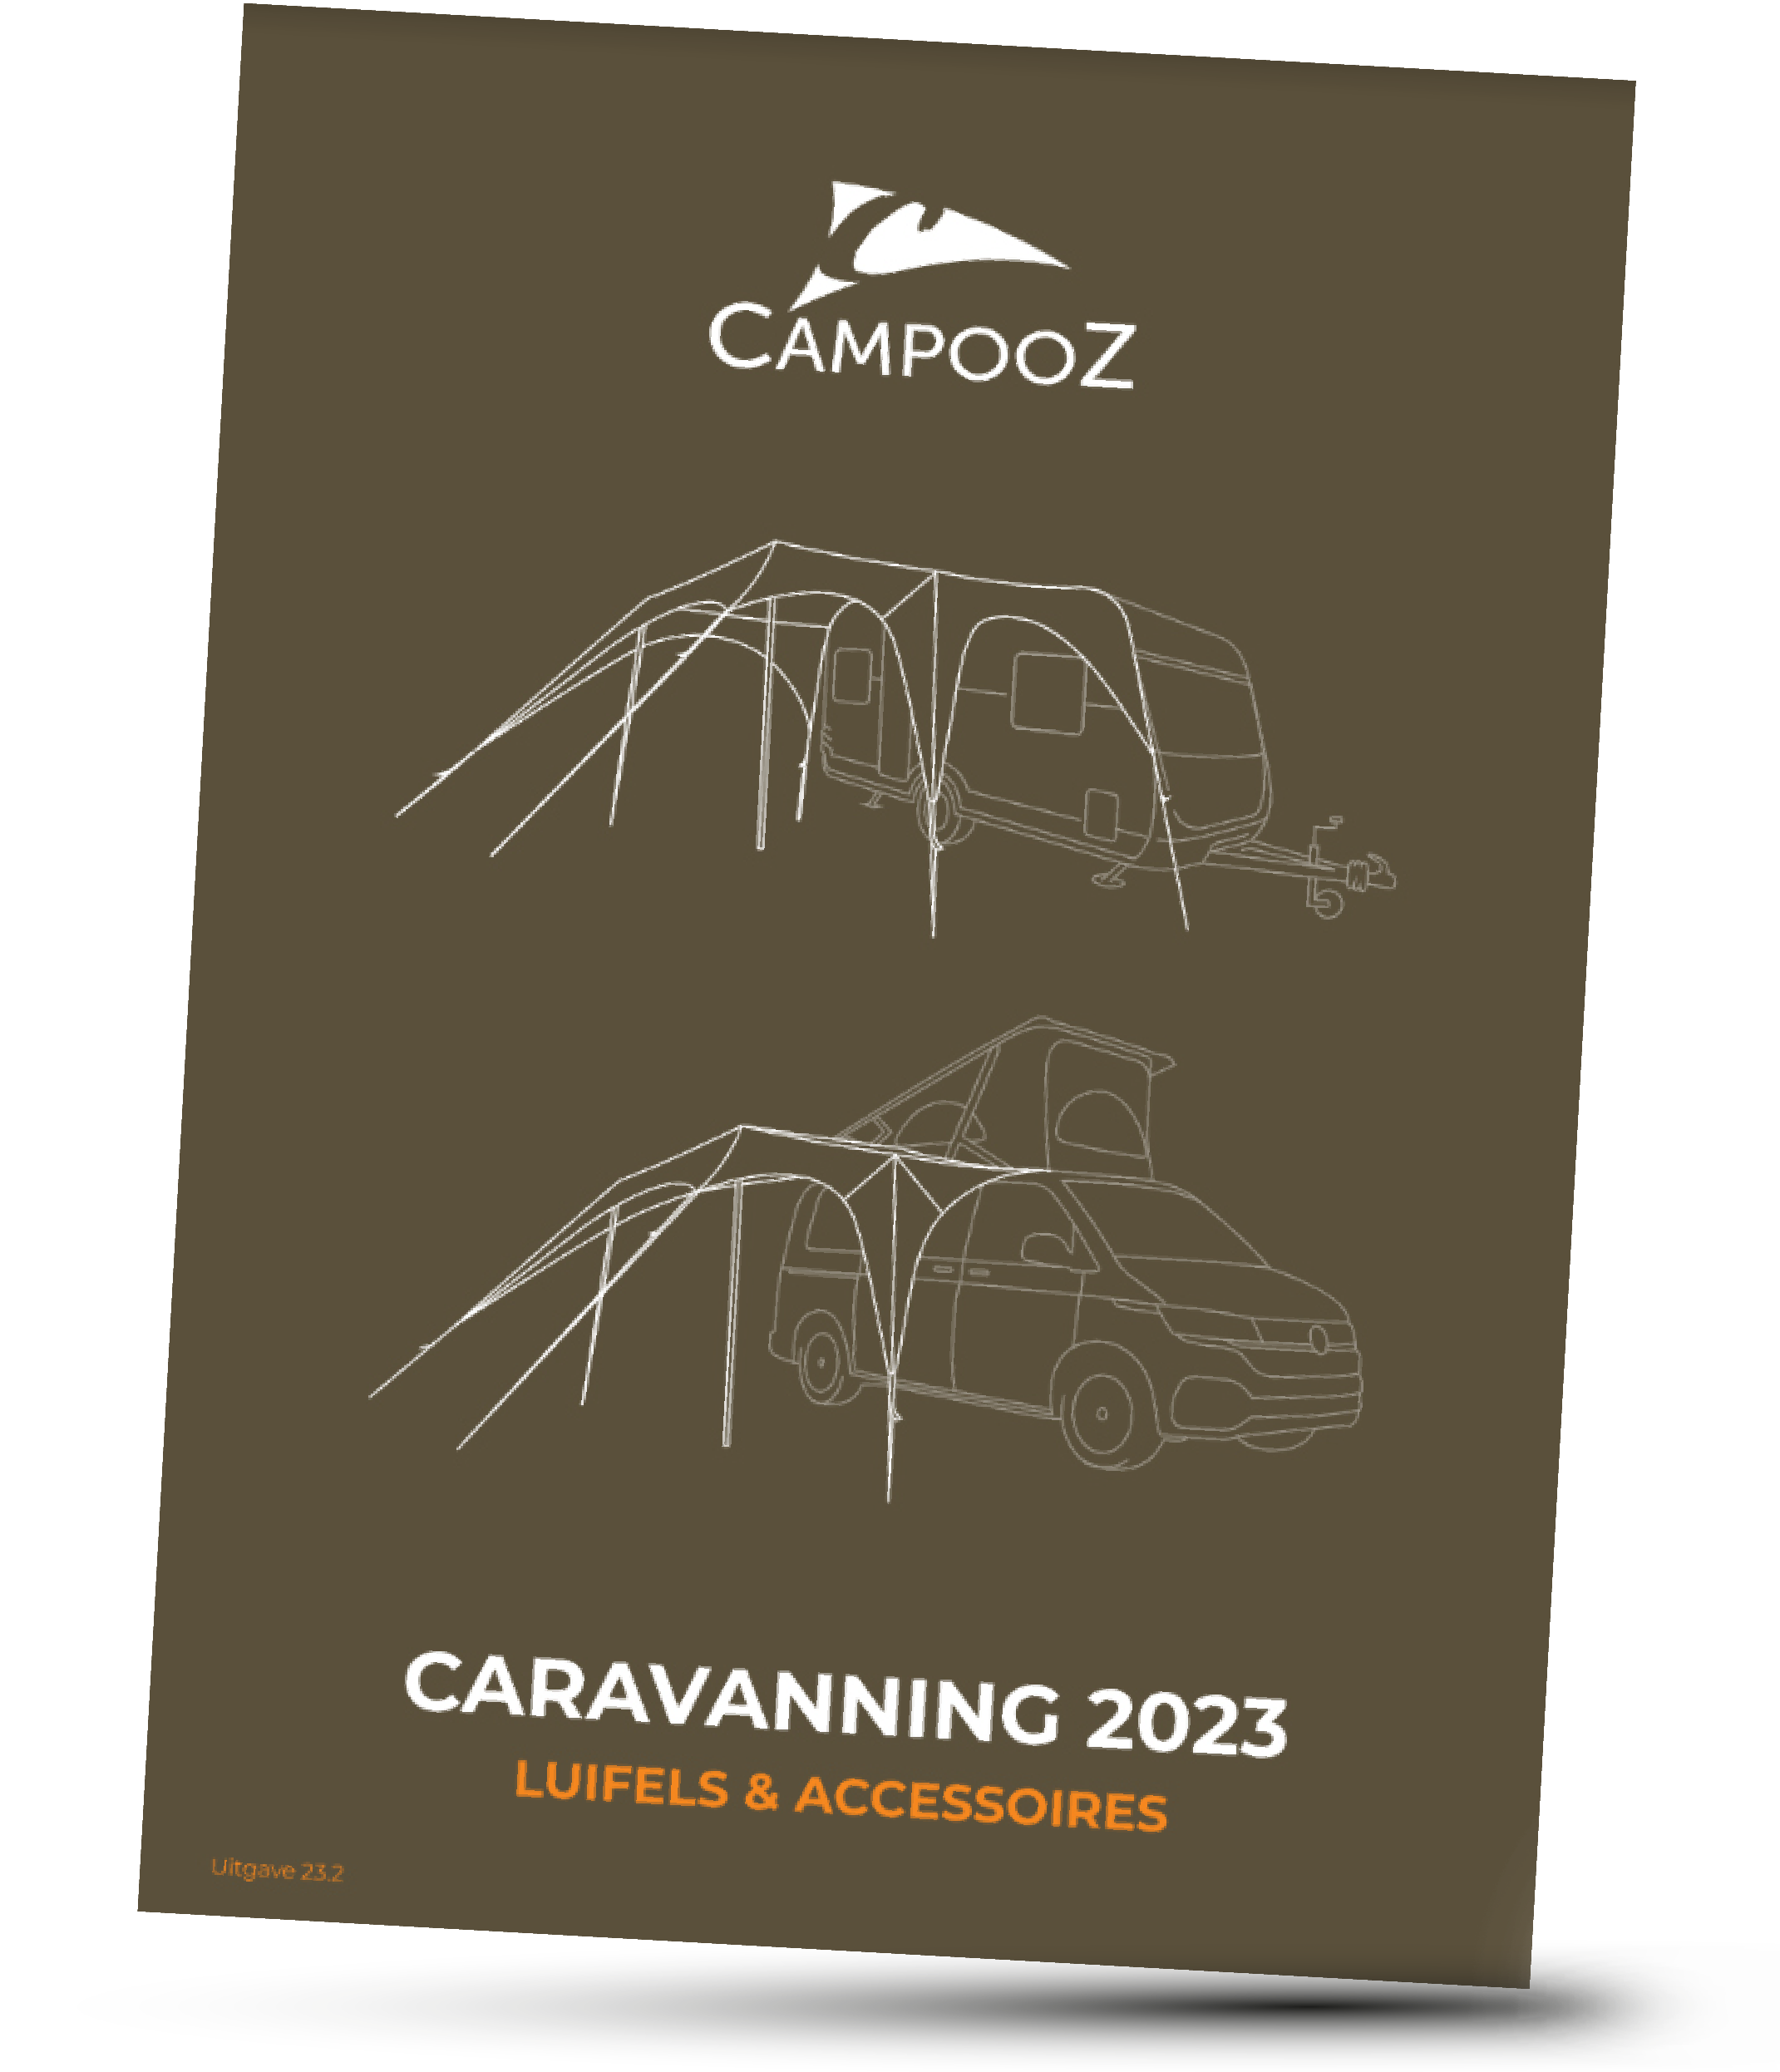 Campooz Caravanning Brochure